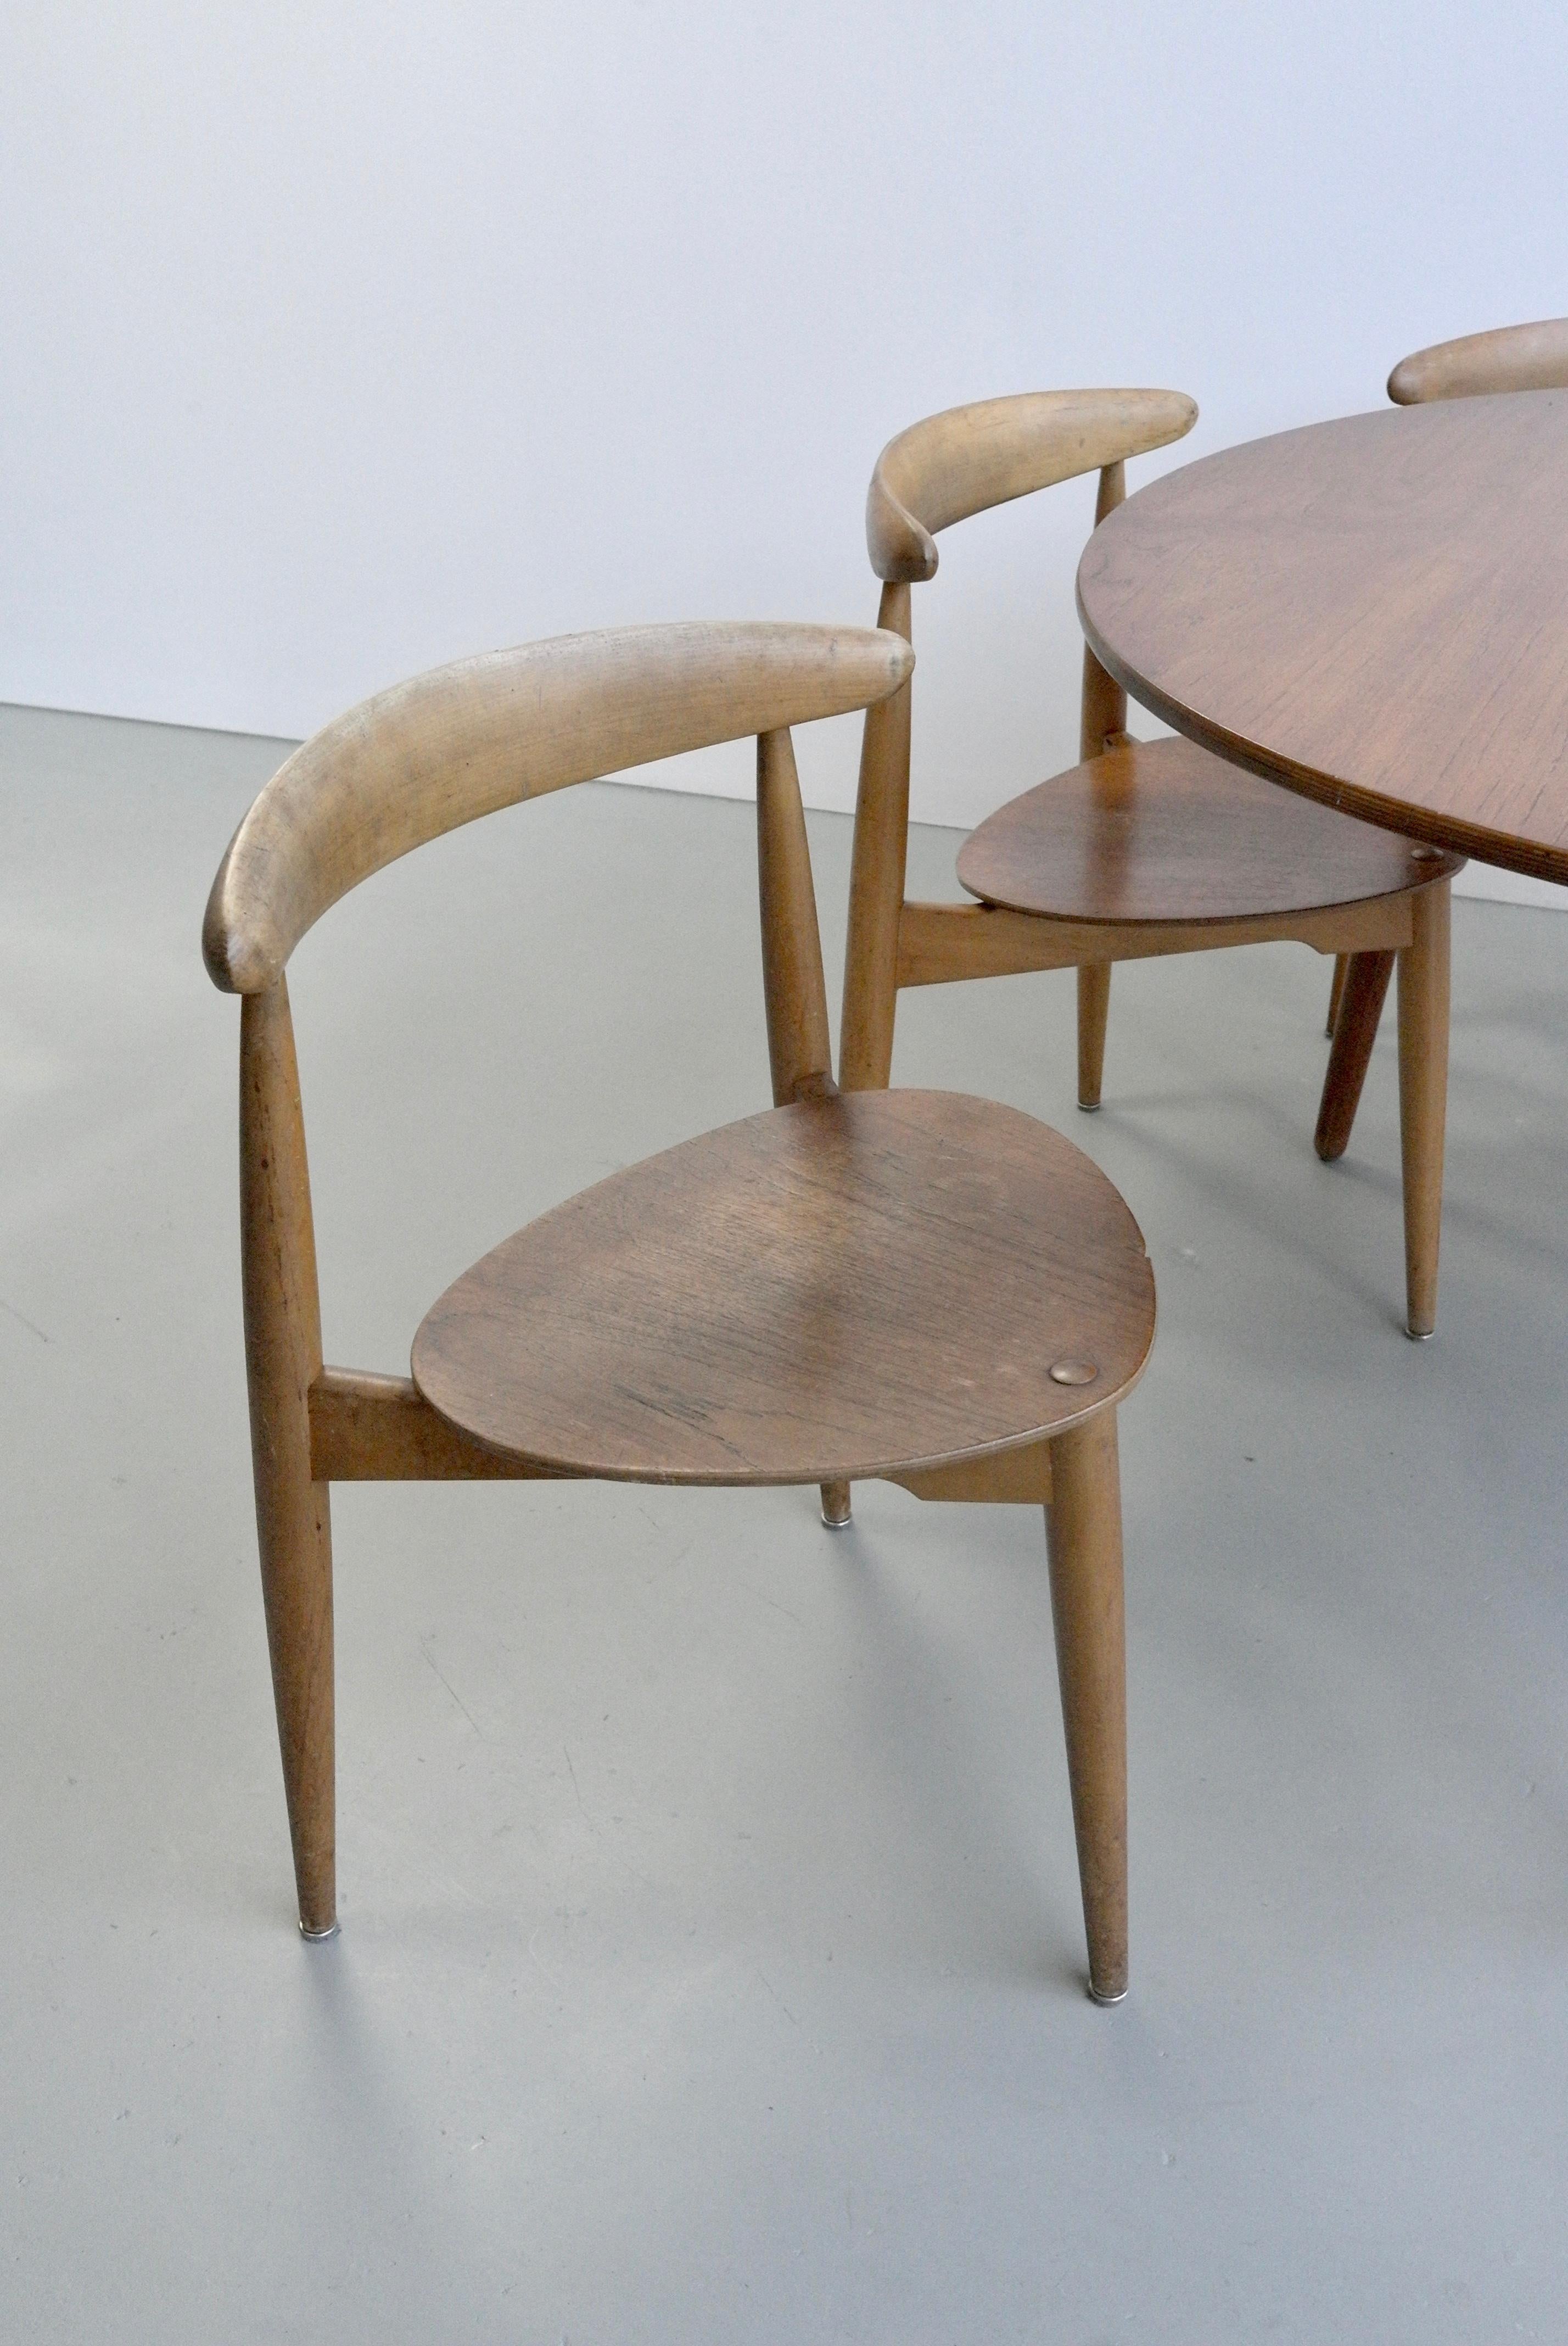 20th Century Hans Wegner Teak Dining Table and Six Heart Chairs by Fritz Hansen Denmark 1950s